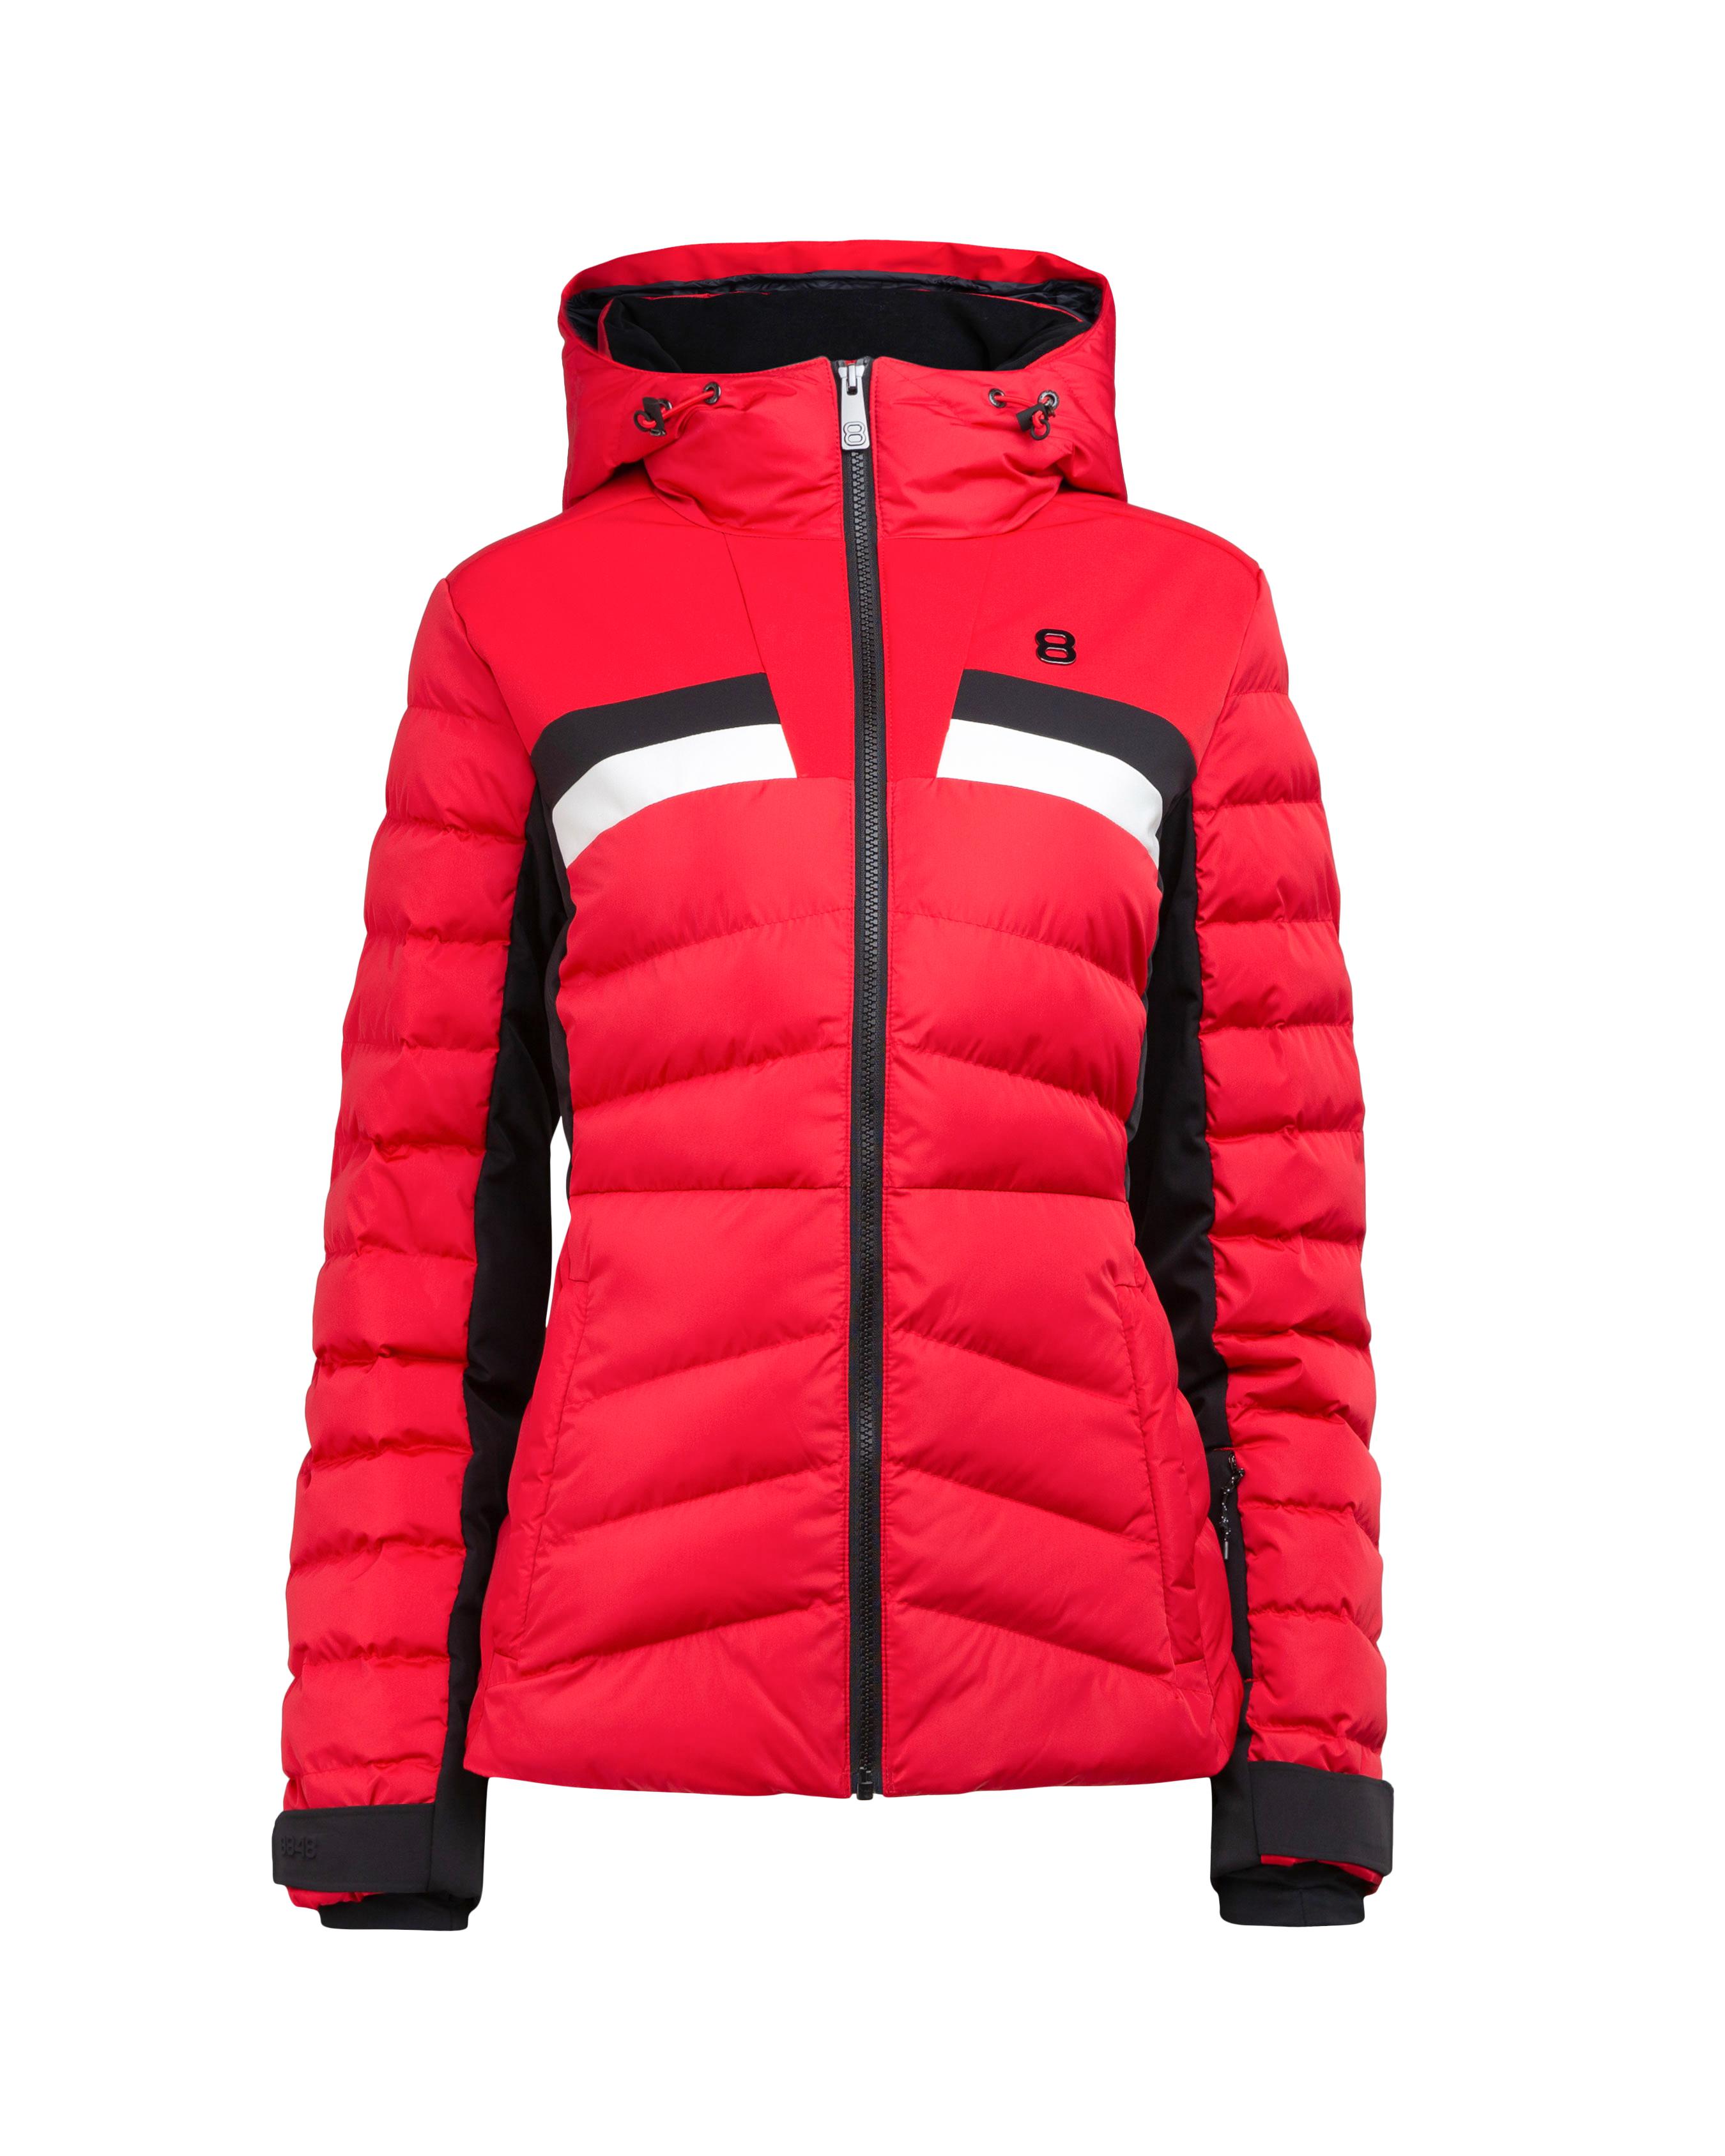 Lucia W Jacket Red - Rote Ski Jacke Damen